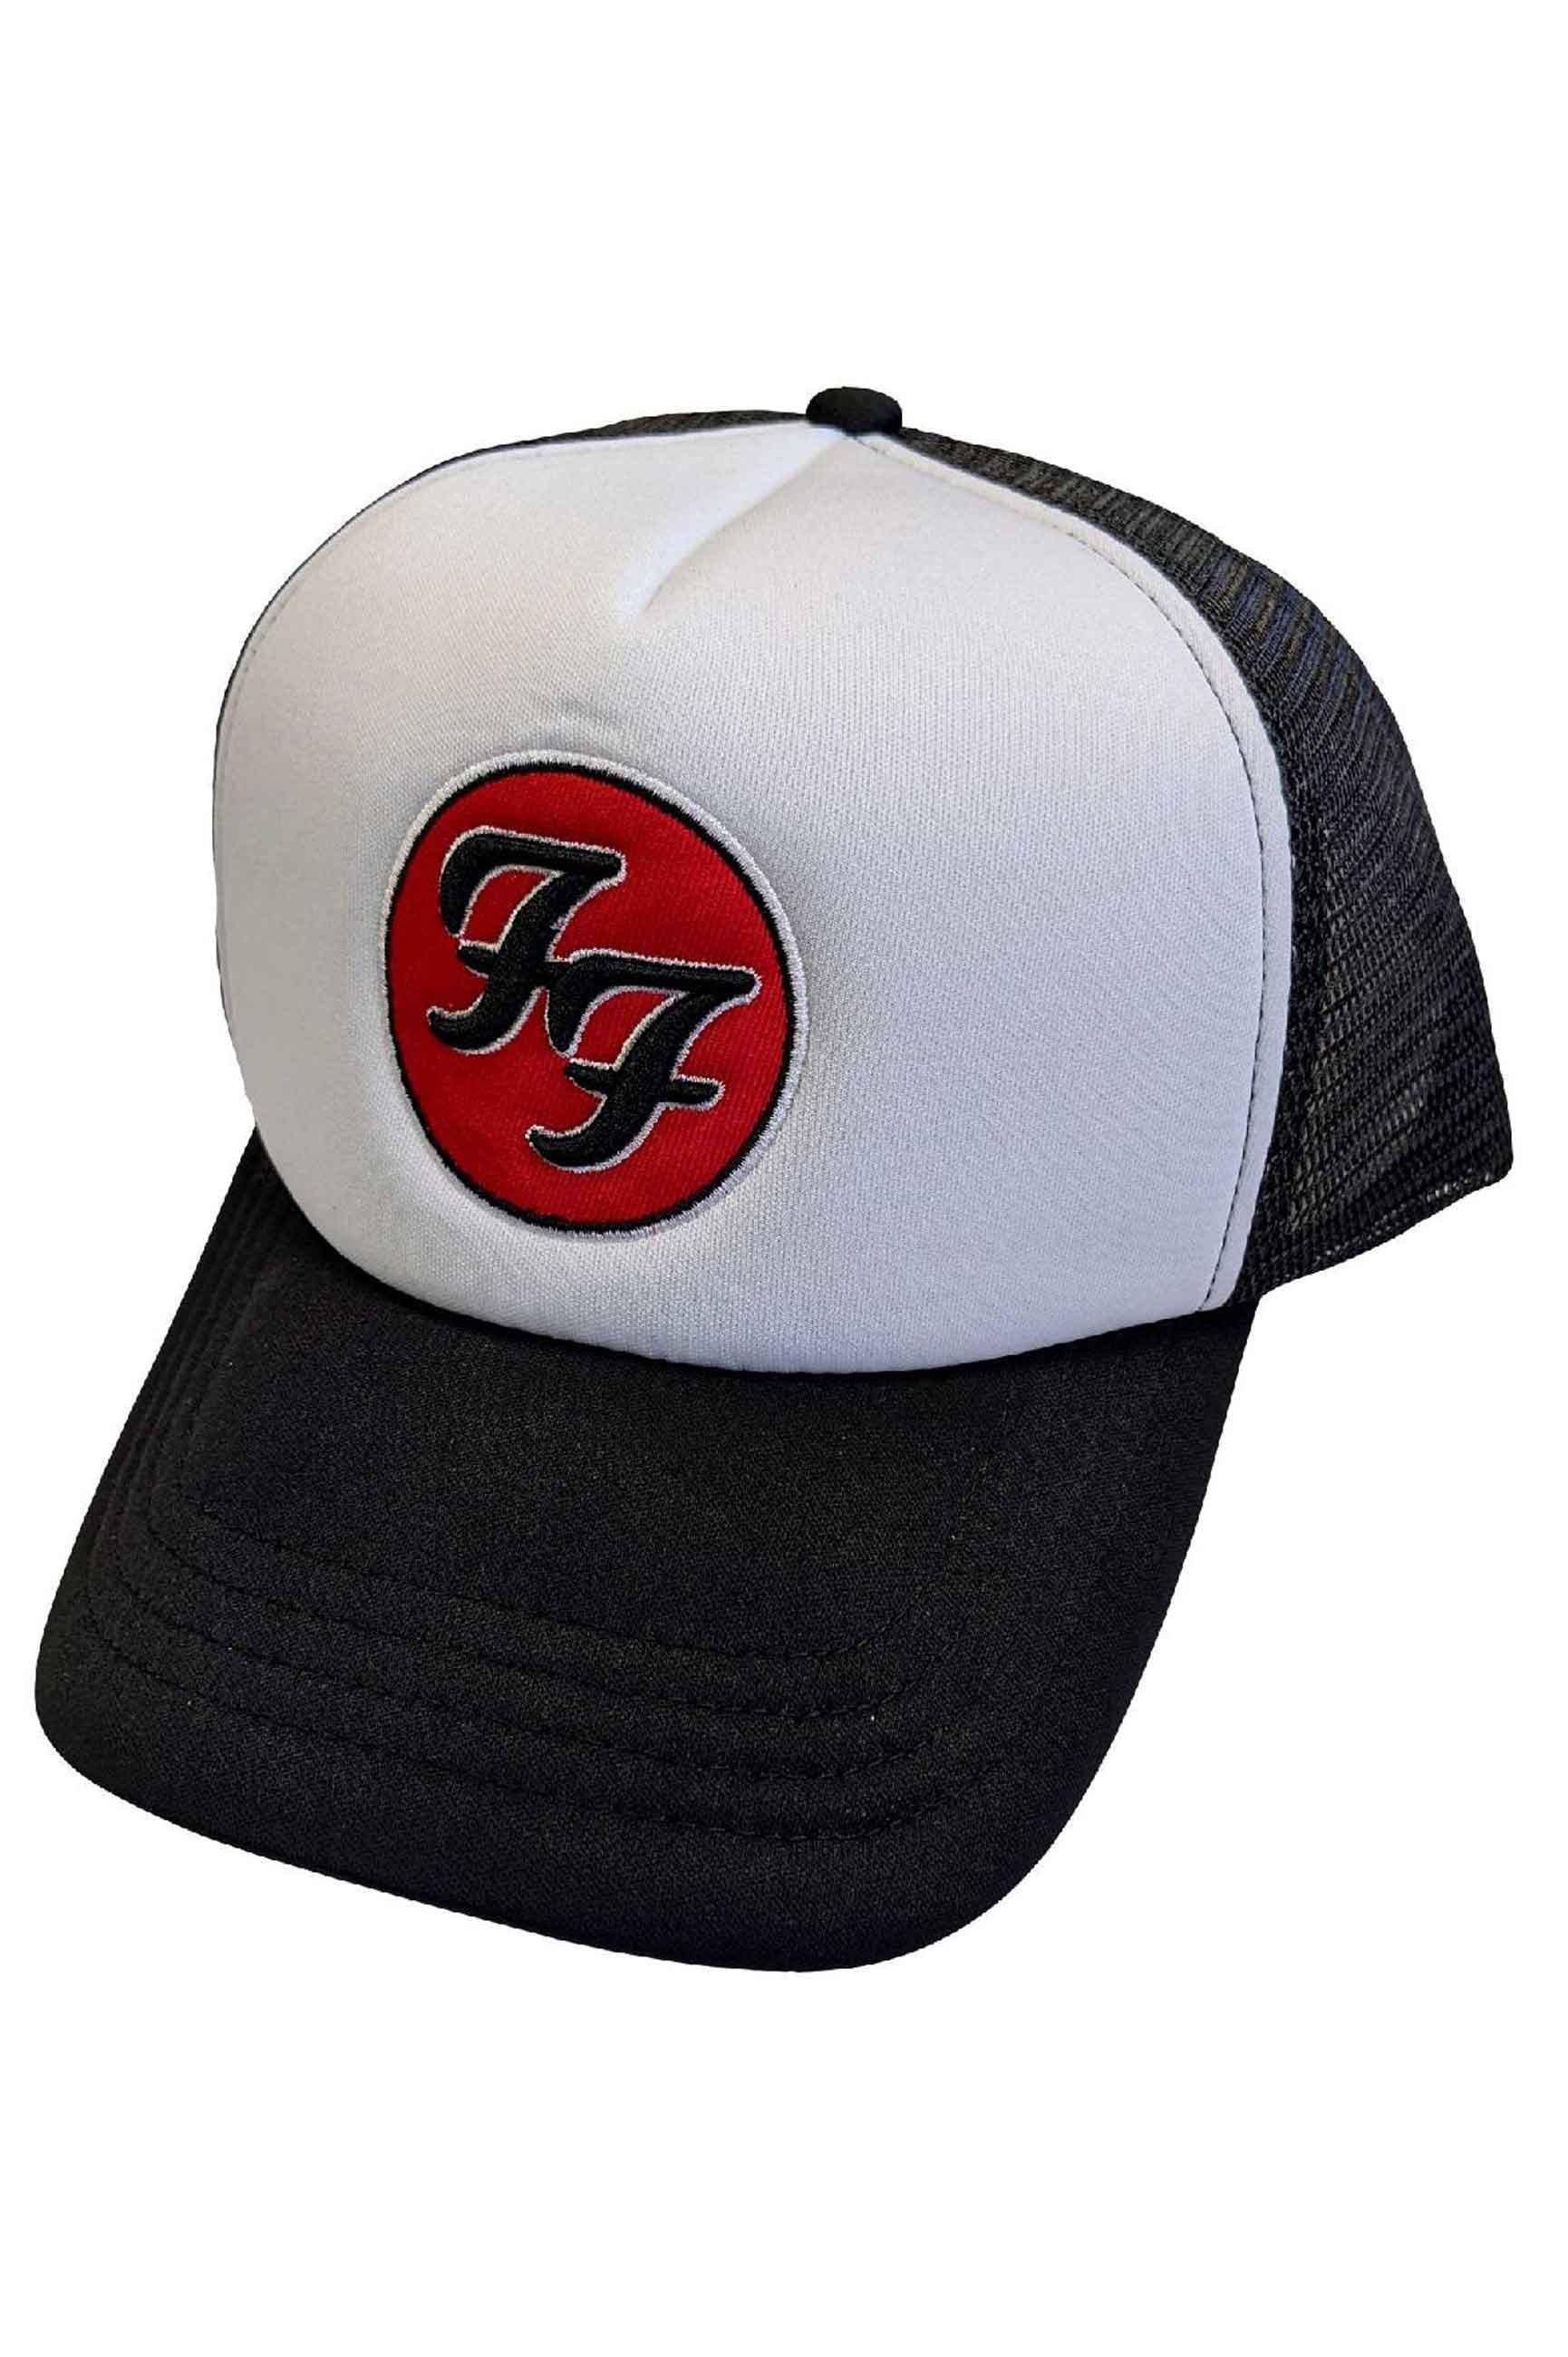 Бейсбольная кепка Trucker с логотипом FF Band Foo Fighters, черный printio кепка с логотипом глубина